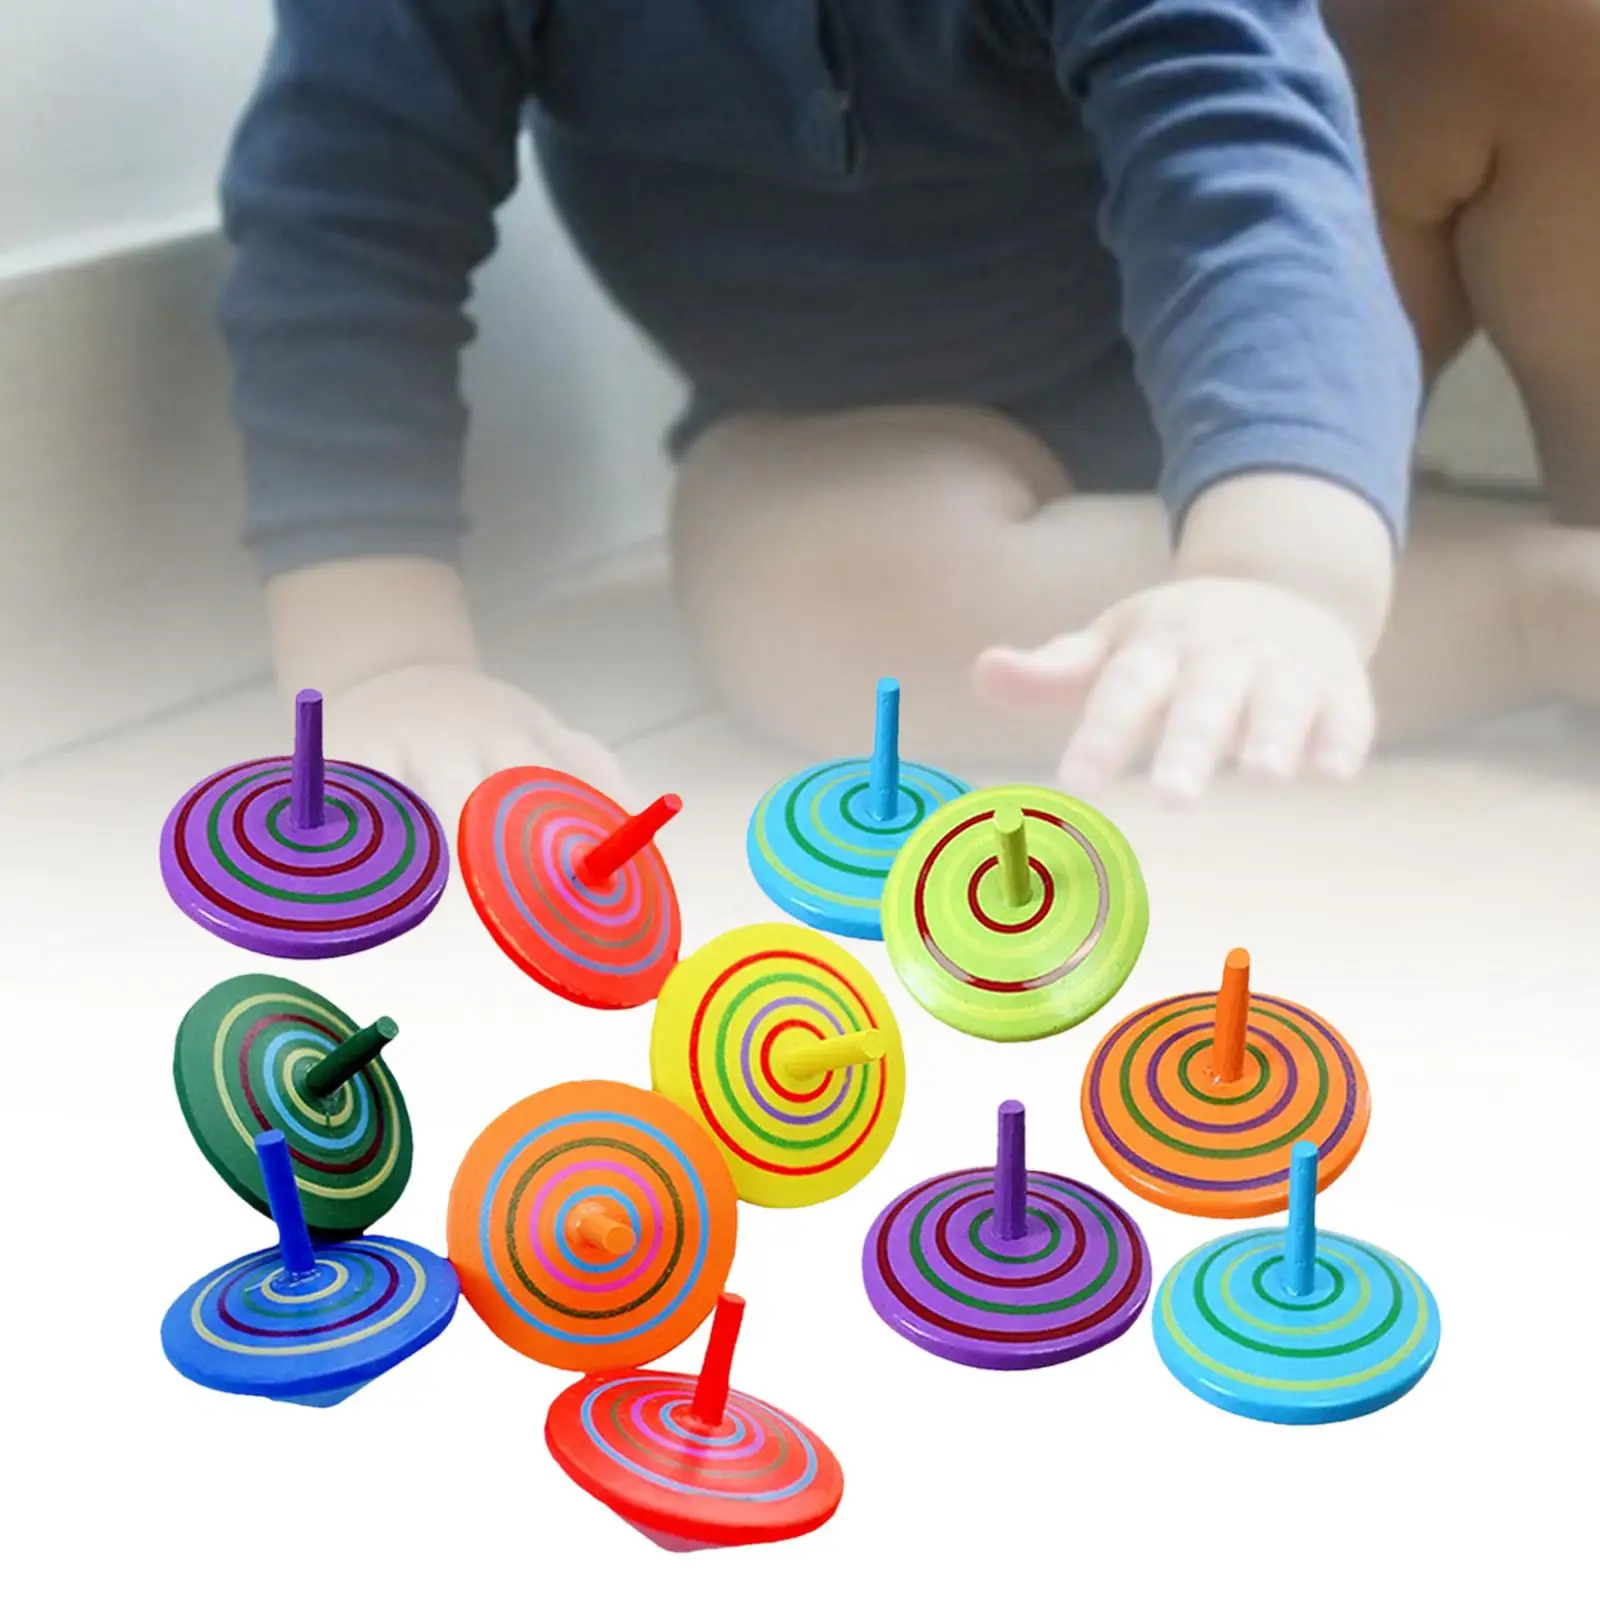 Wooden Gyro Toy Developmental Hands Eye Cooperation Educational Game for Children Girls Boys Kids Birthday Gifts